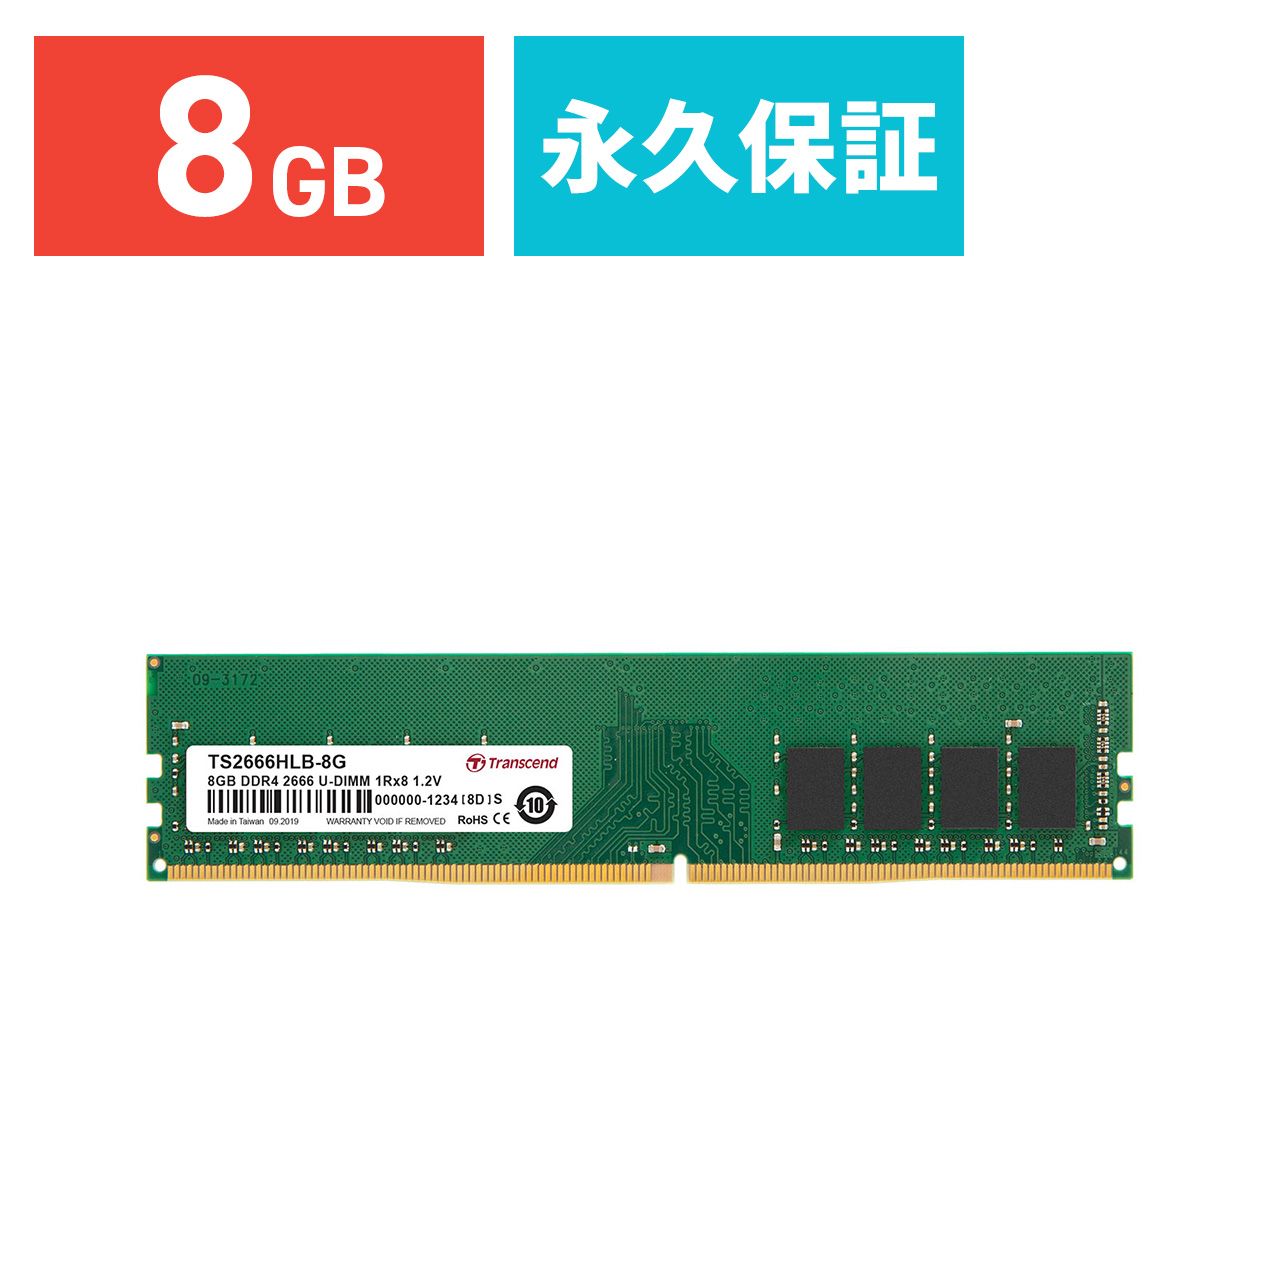 Transcend fXNgbvp 8GB DDR4-2666 PC4-21300 U-DIMM TS2666HLB-8G TS2666HLB-8G